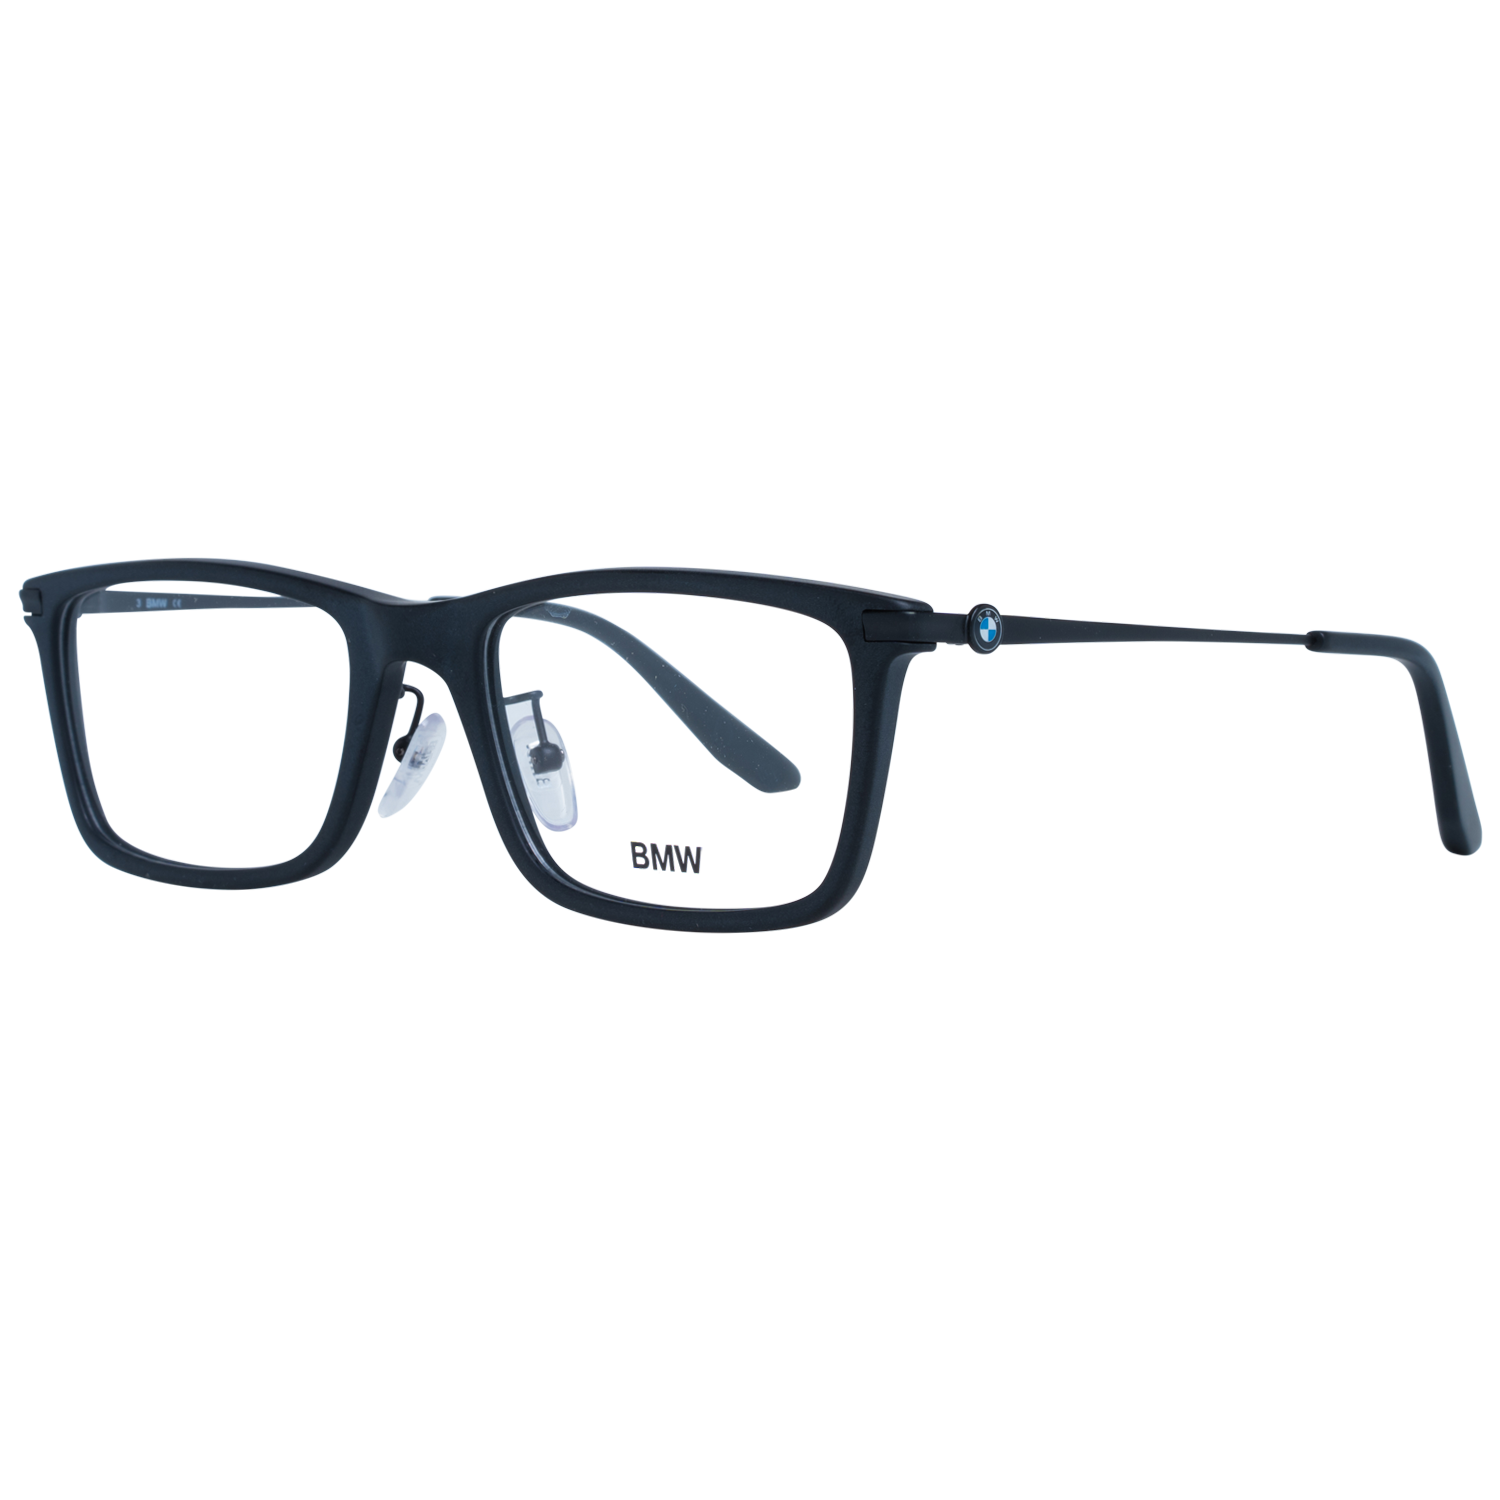 BMW Frames BMW Eyeglasses Frames BW5020 002 56 Eyeglasses Eyewear UK USA Australia 